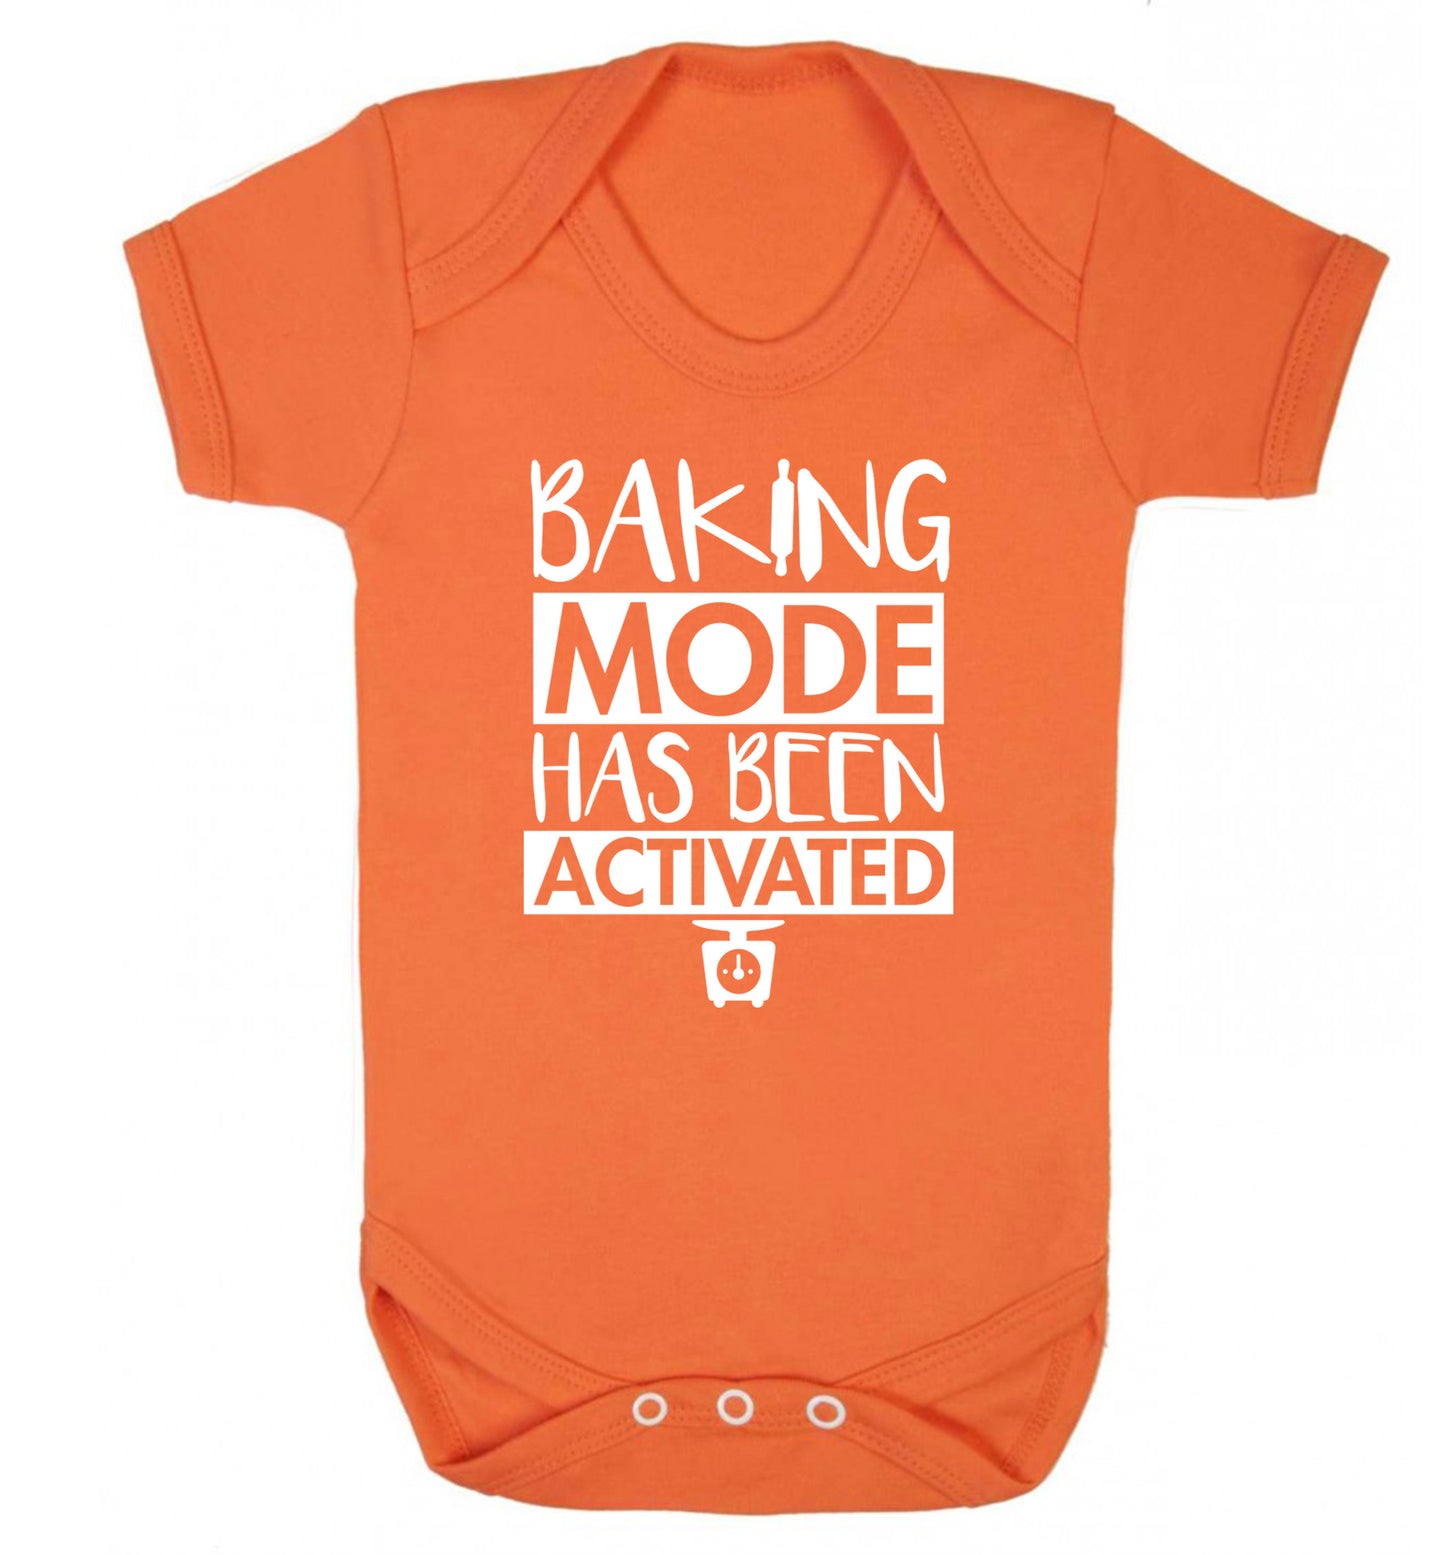 Baking mode has been activated Baby Vest orange 18-24 months